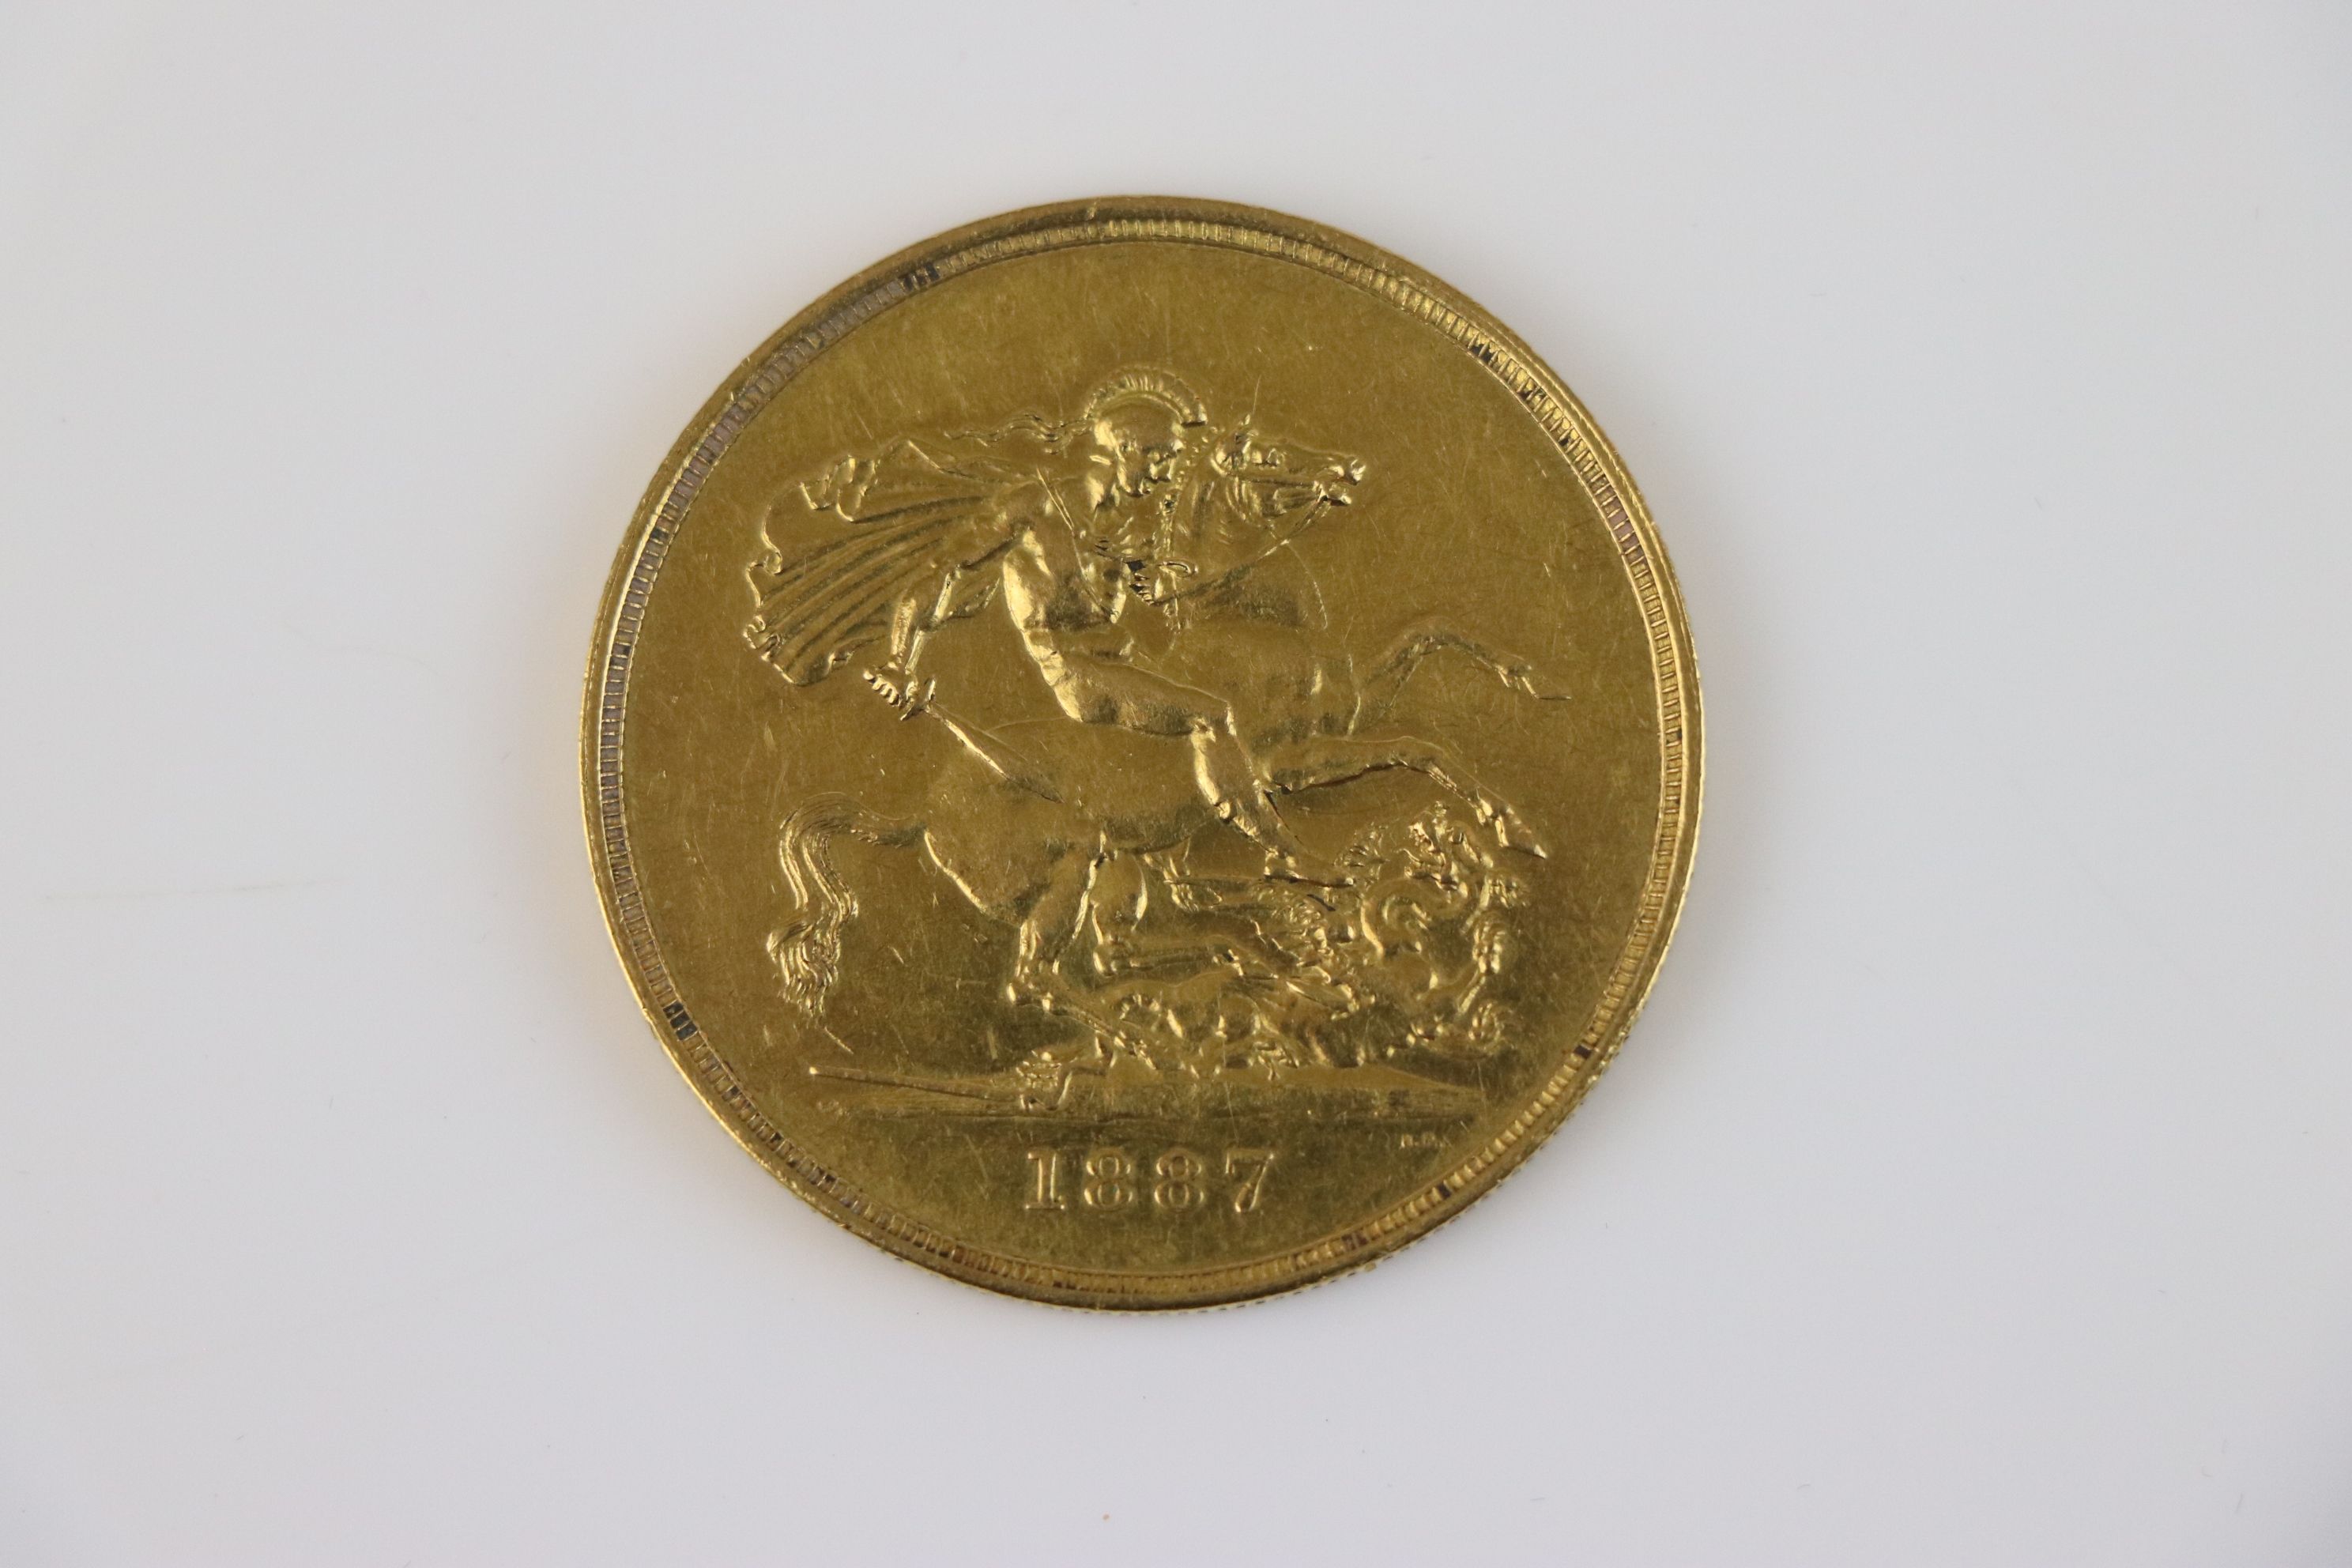 A Queen Victoria Jubilee Head 1887 Gold £5 coin.